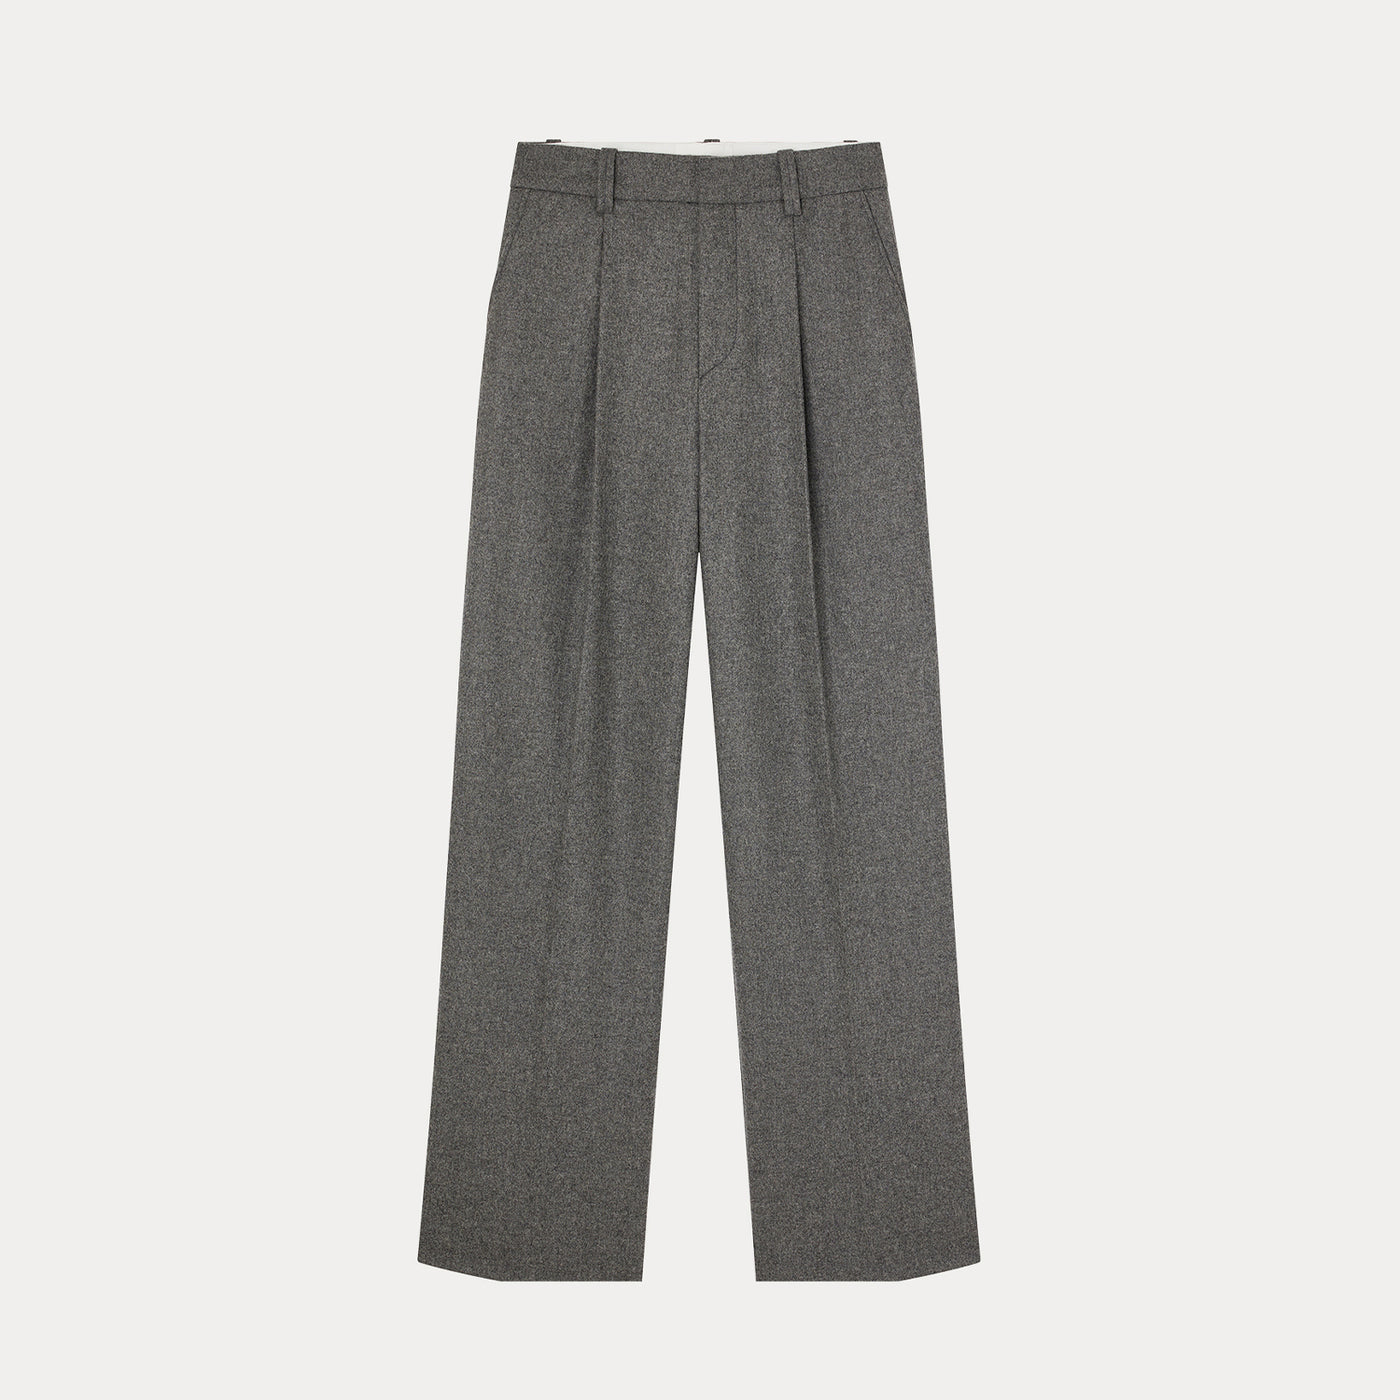 Pantalon Marleborne gris chiné